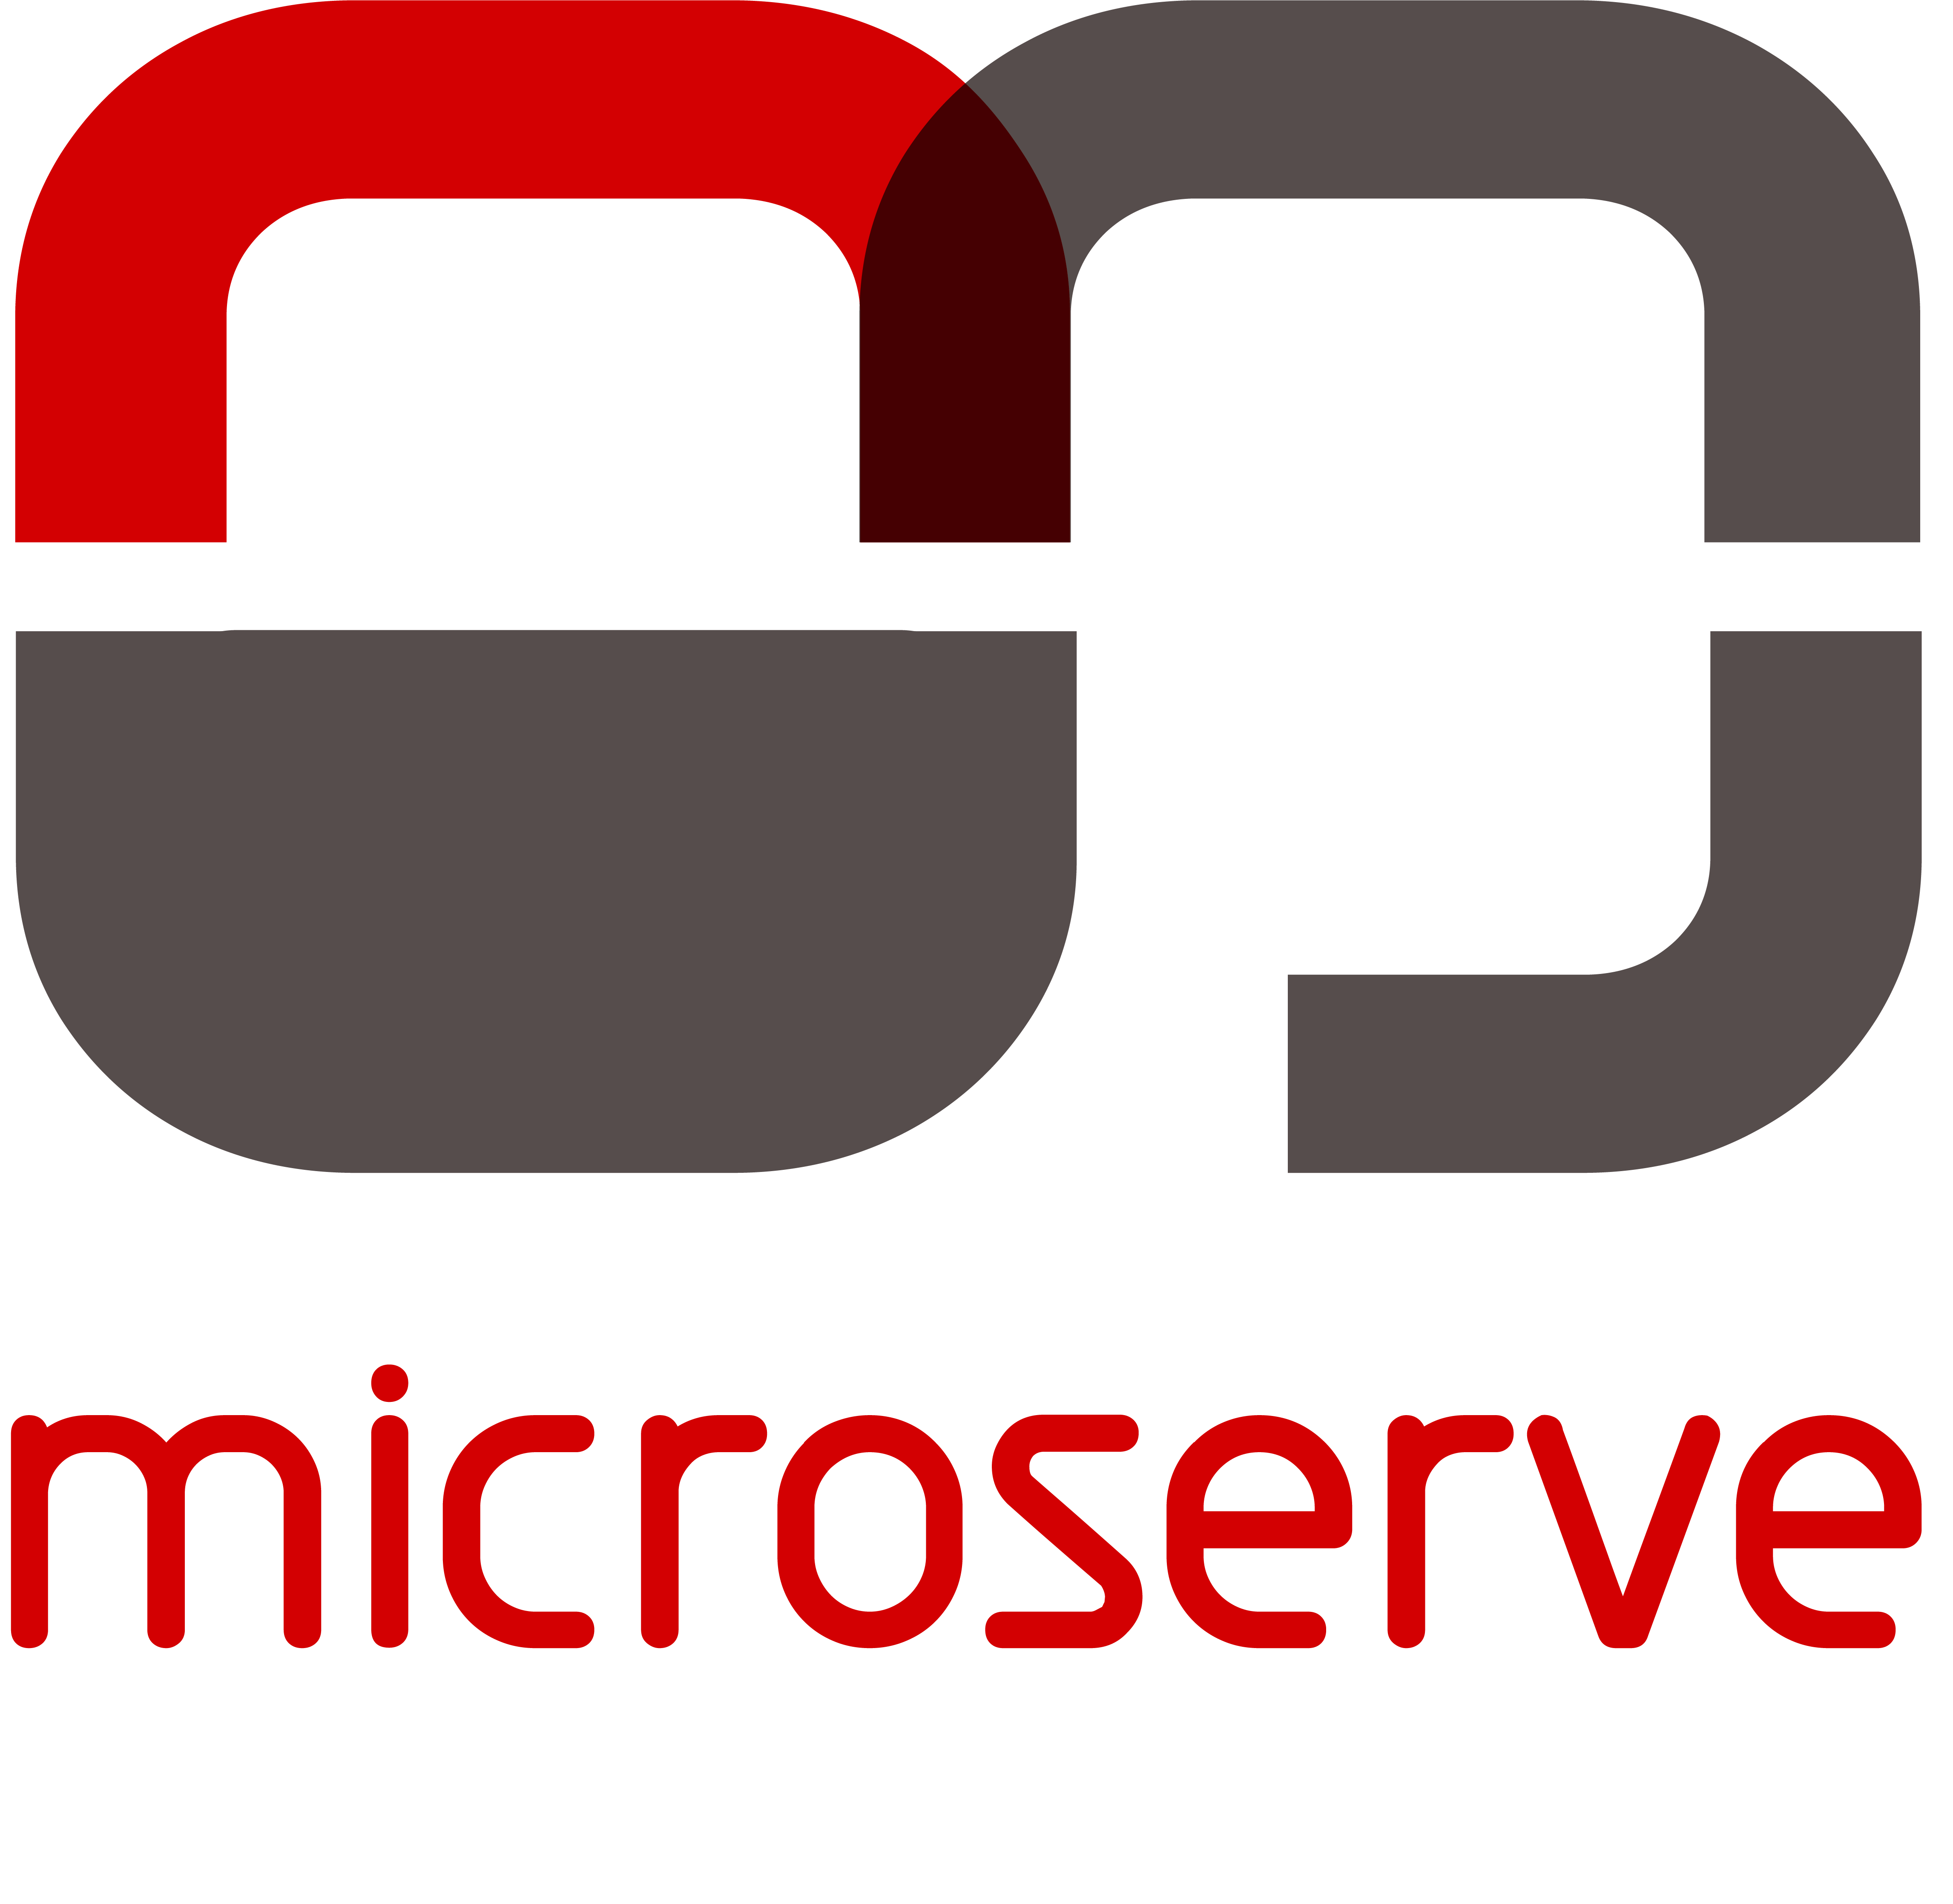 Microserve